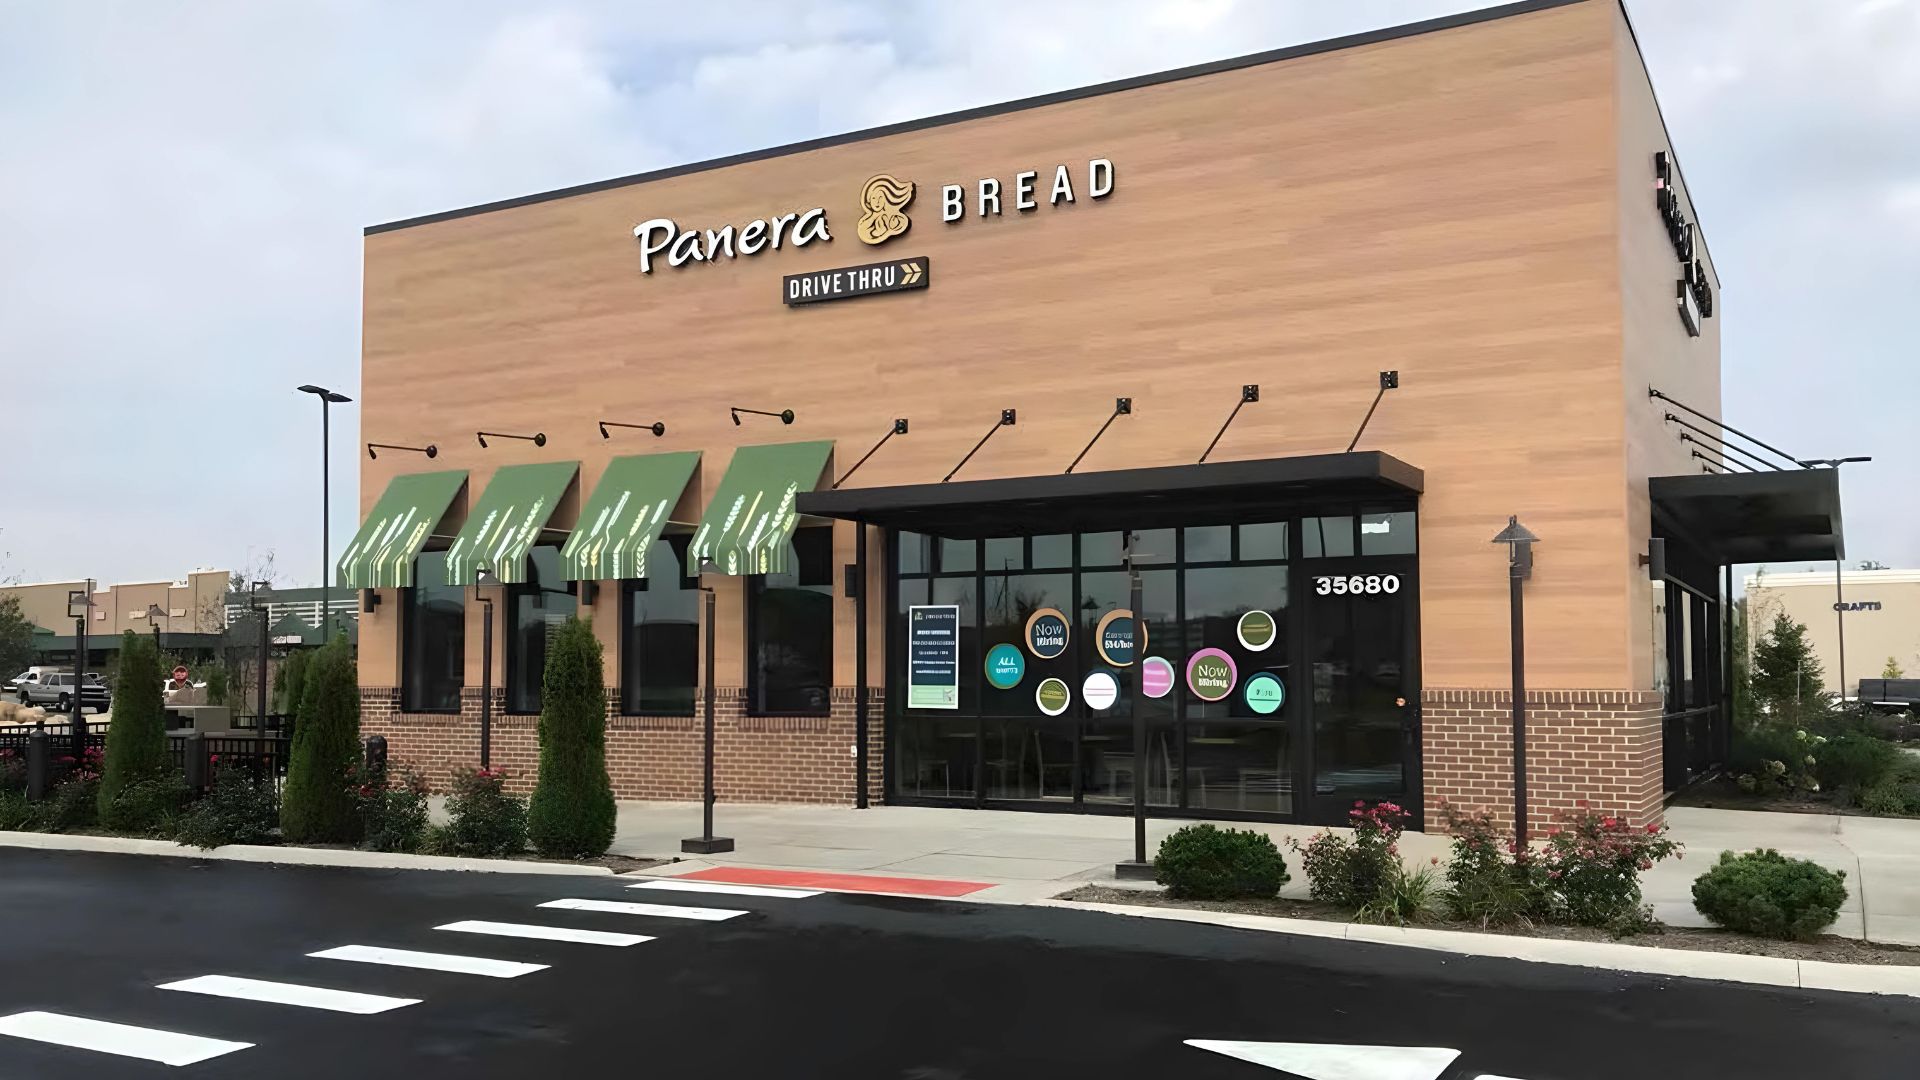 Panera Bread Avon OH Fast Casual Restaurant Entrance